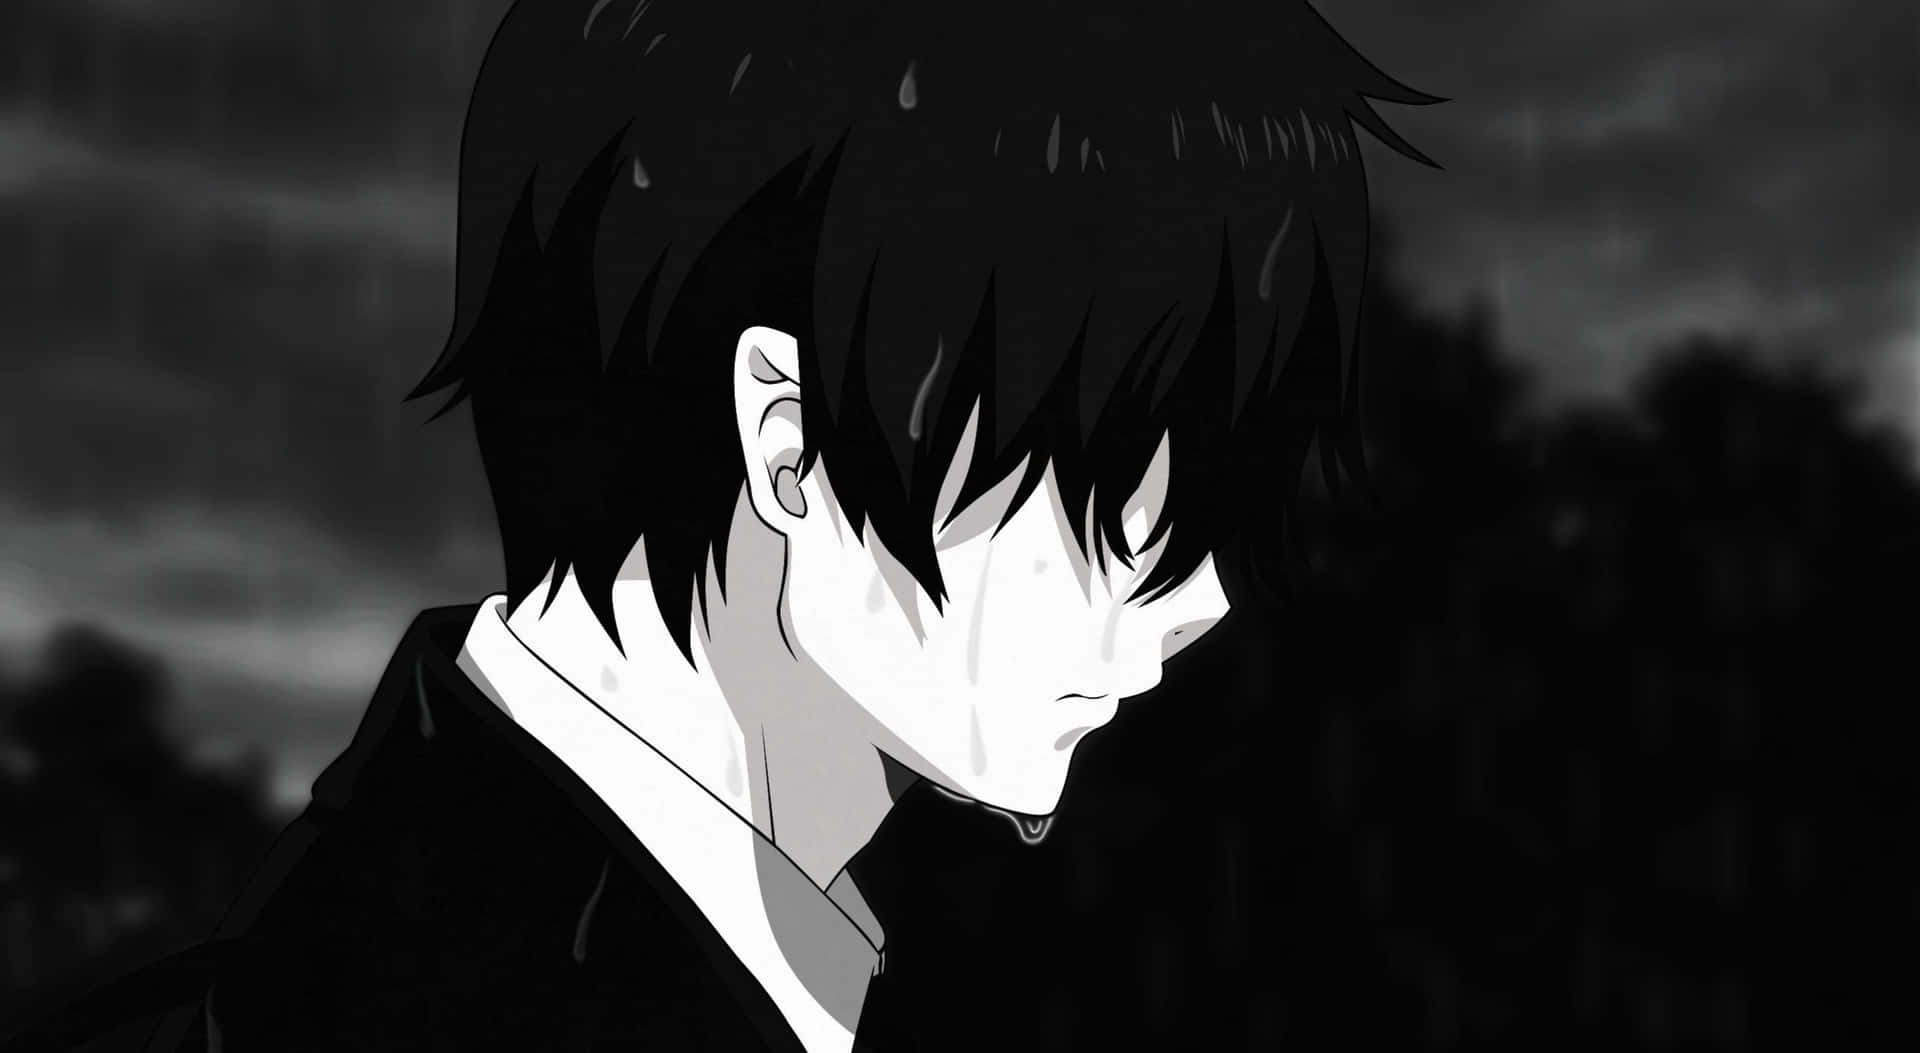 Sad Boy Anime Wallpaper HD - Apps on Google Play